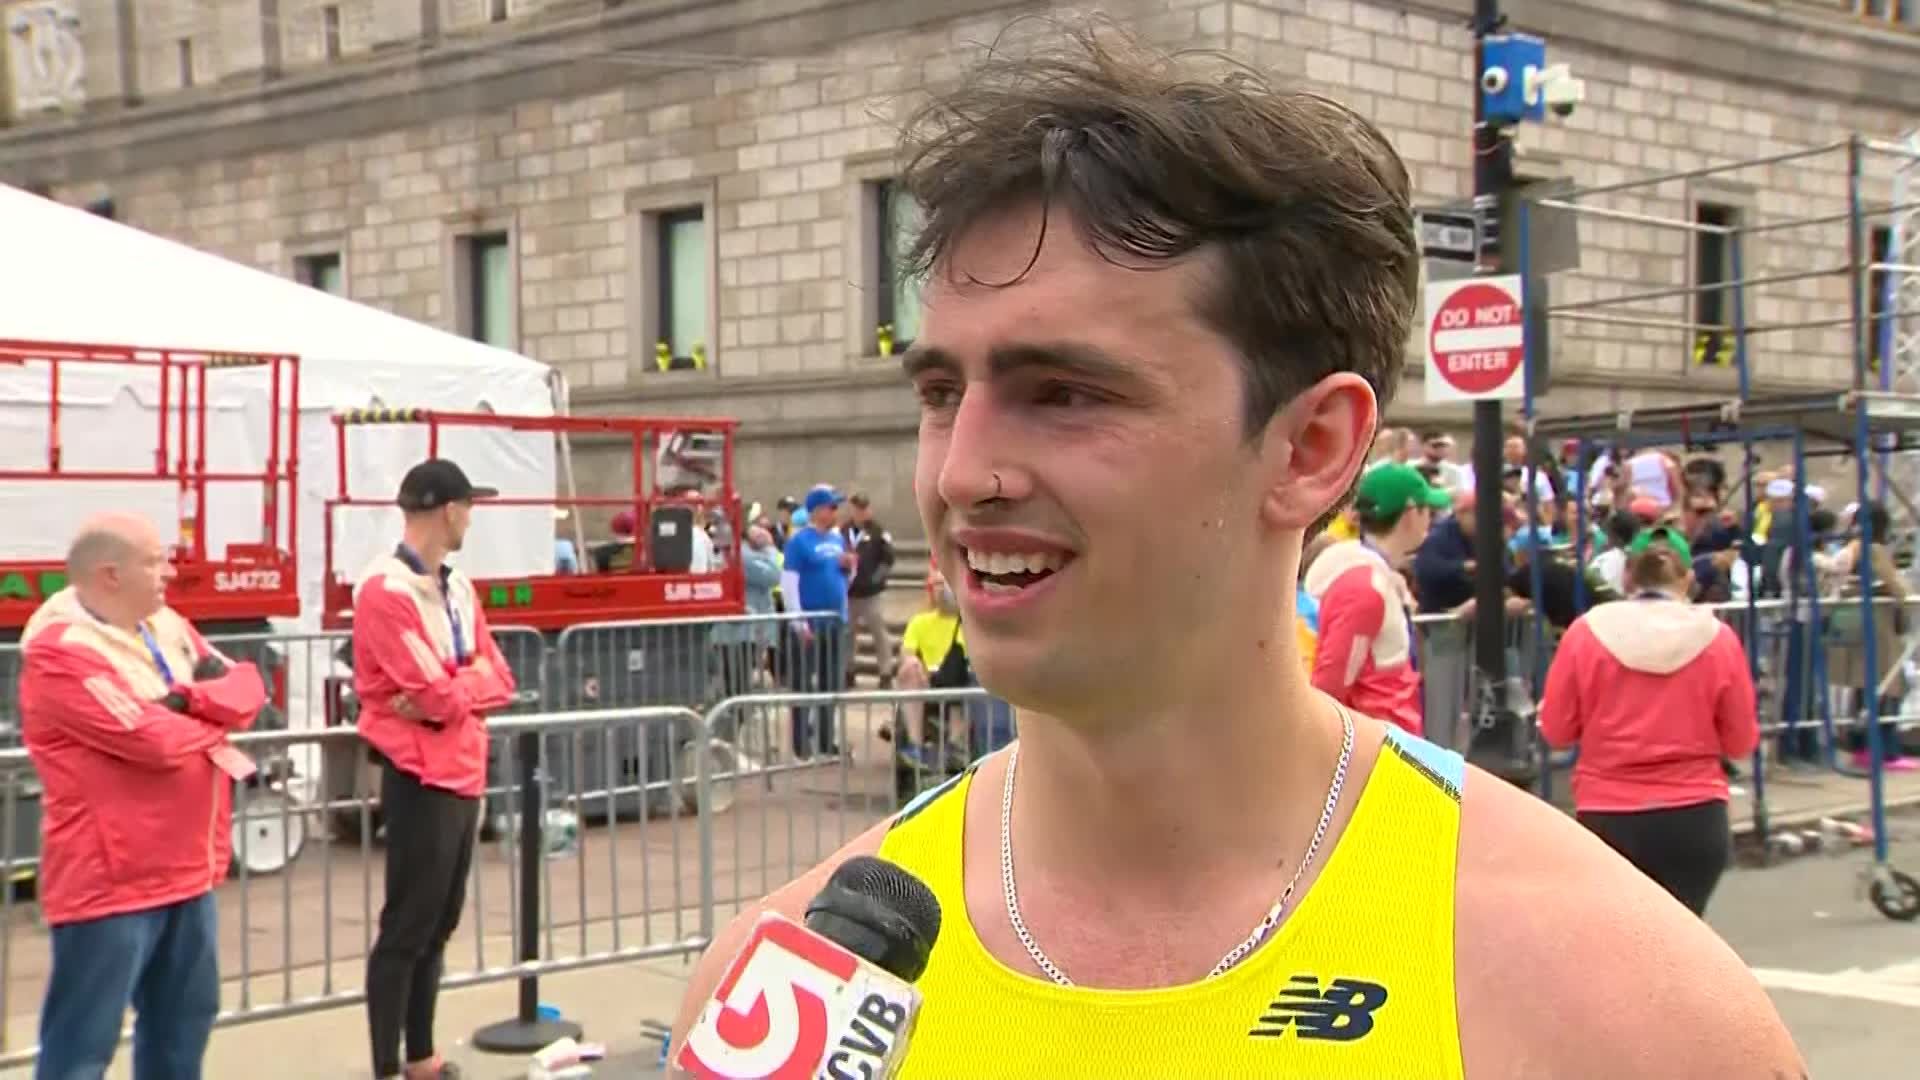 Martin Richard's brother, Henry, completes third Boston Marathon